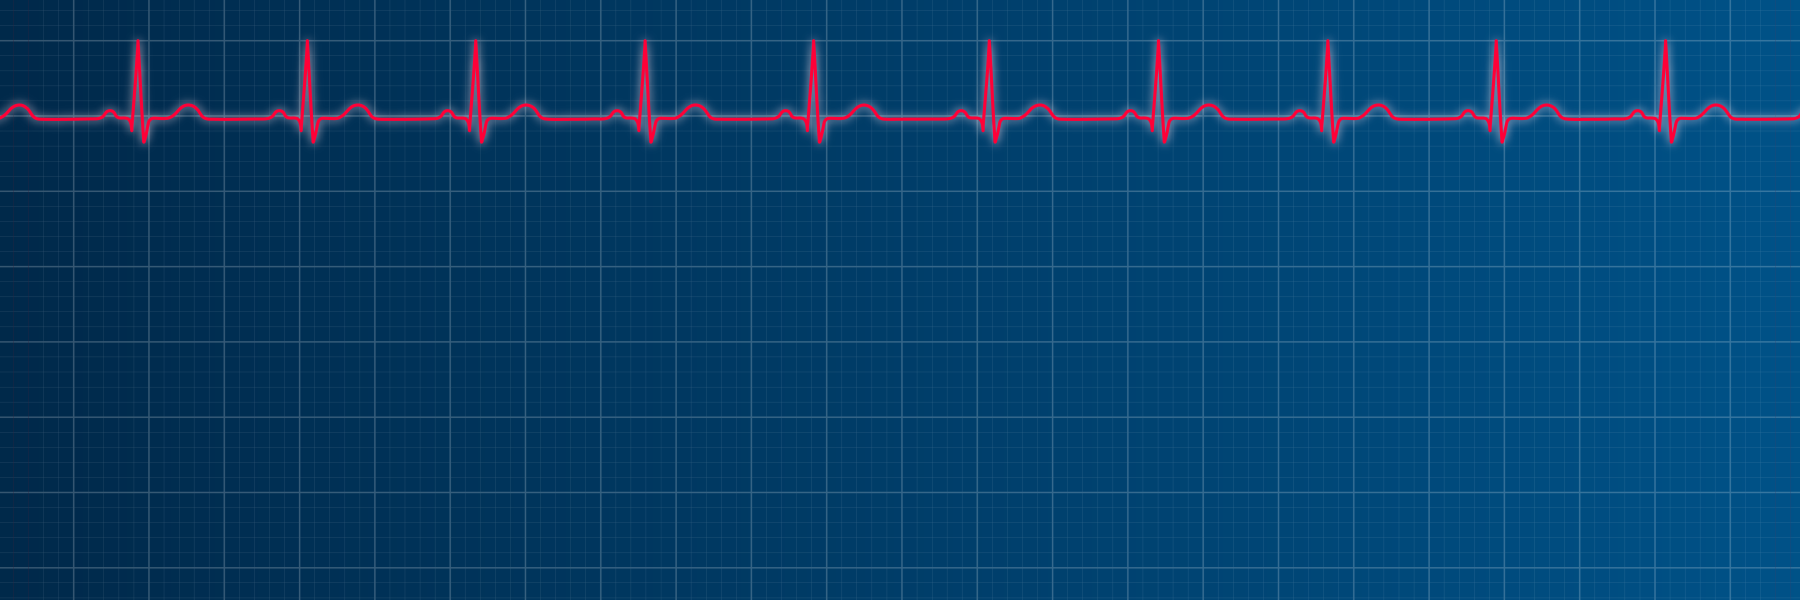 an illustration of an EKG